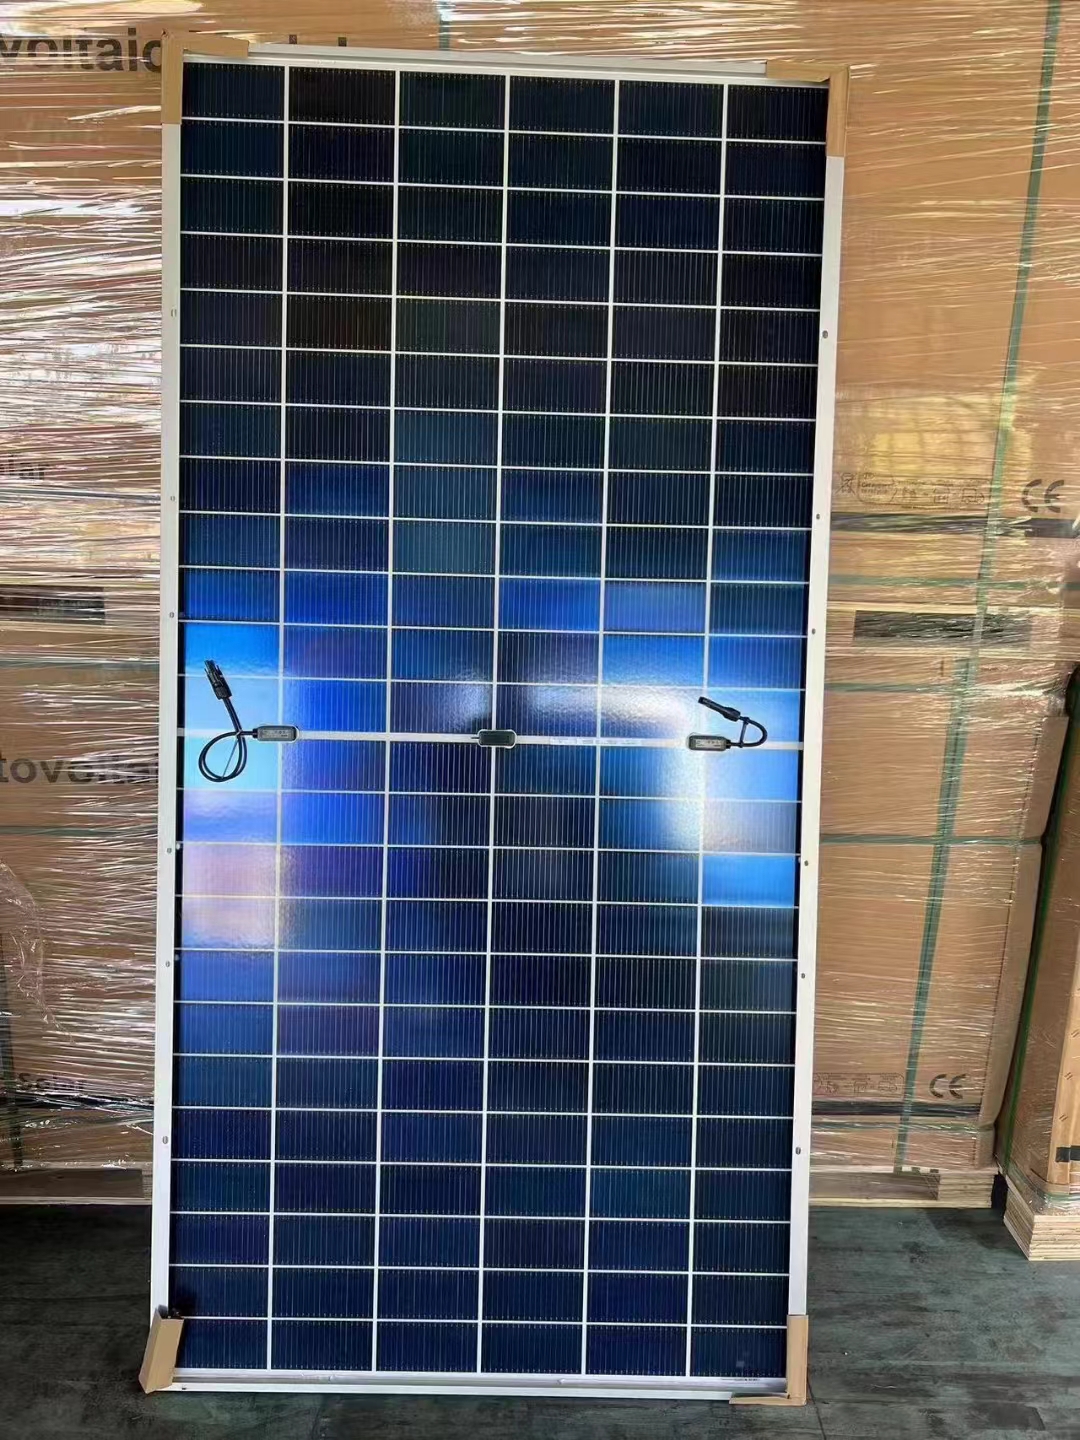 695W Photovoltaic Module solar panel pv solar panel